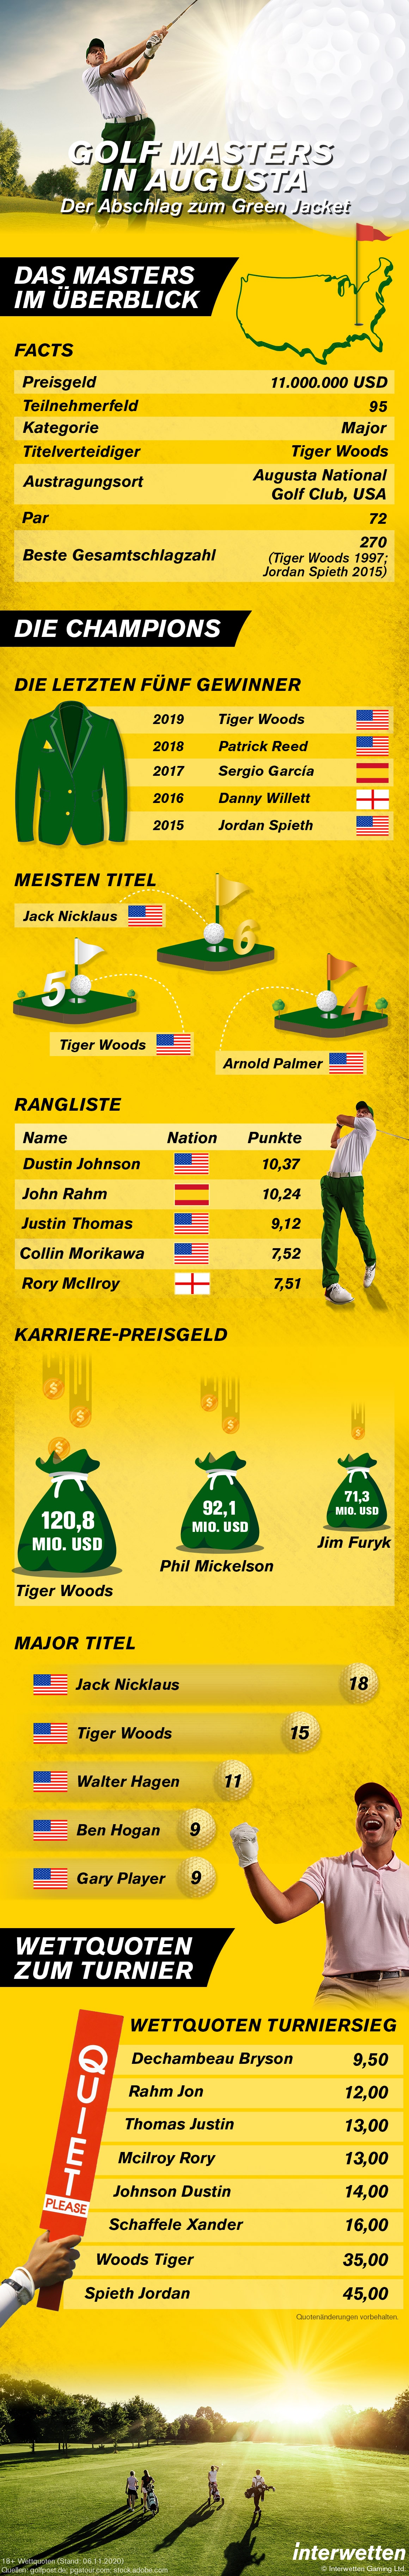 Infografik Interwetten Golf Masters 11 2020